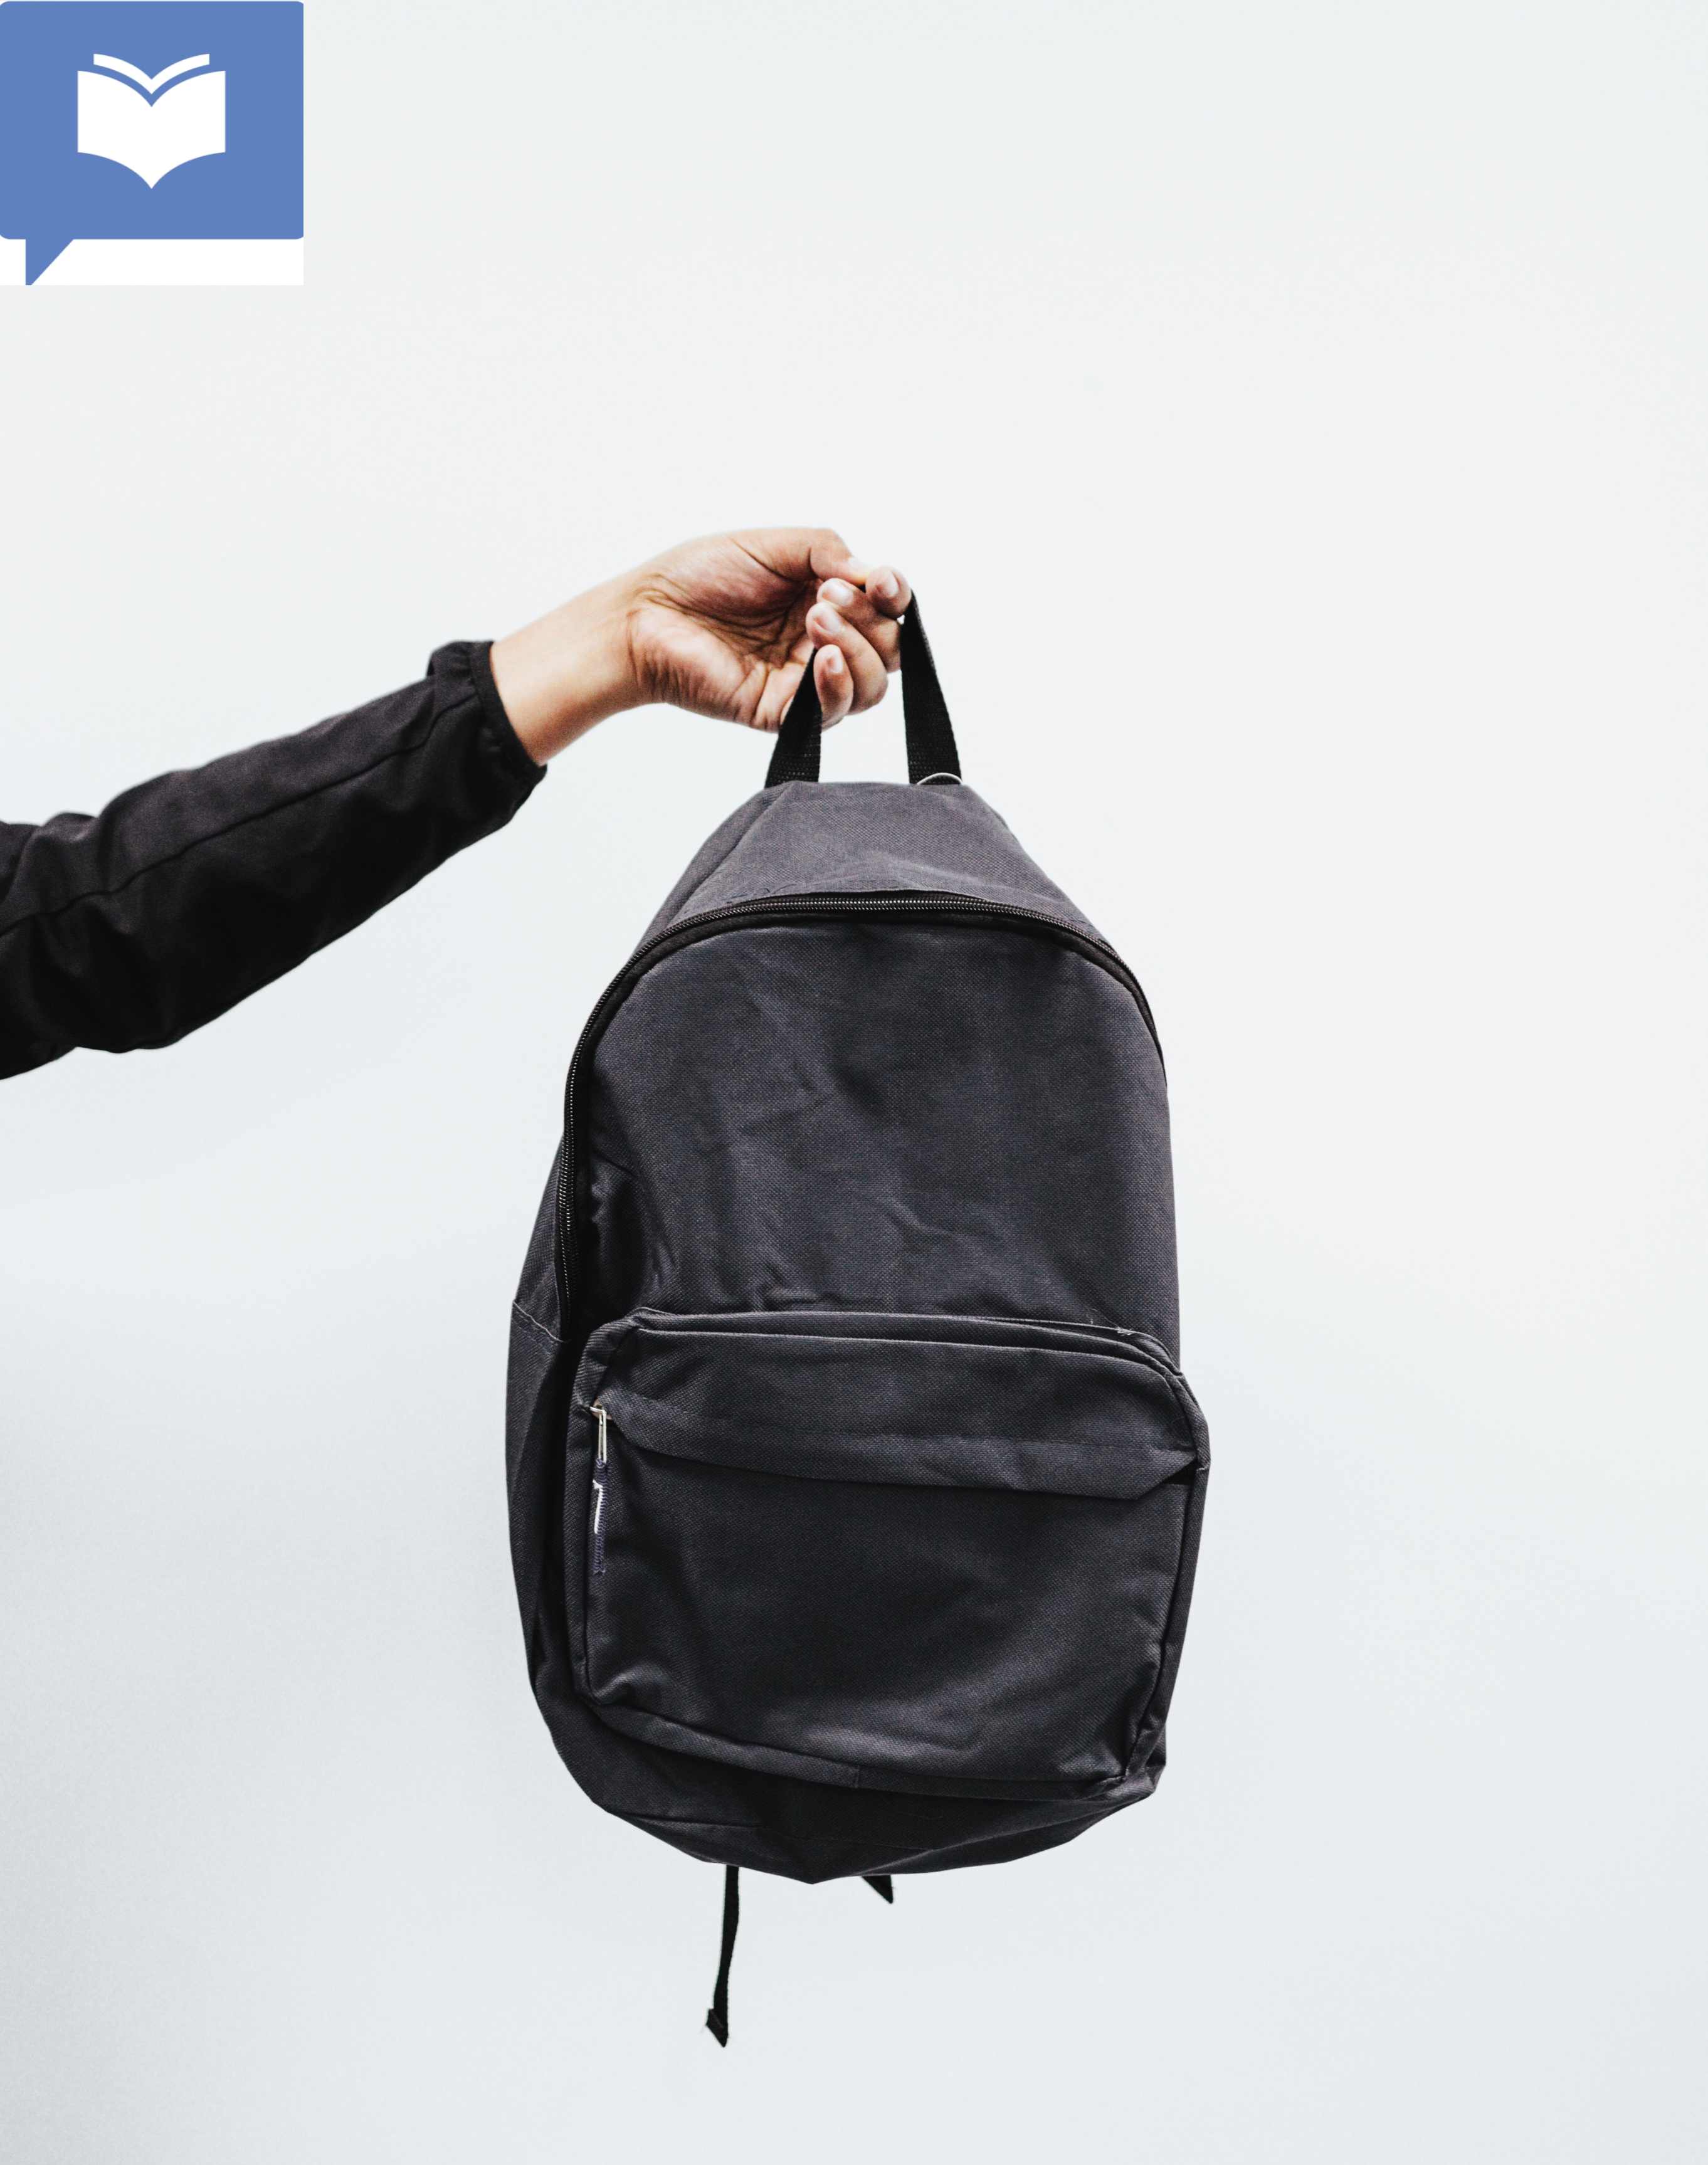 <p>The school bag belongs to you. It is ______.</p>